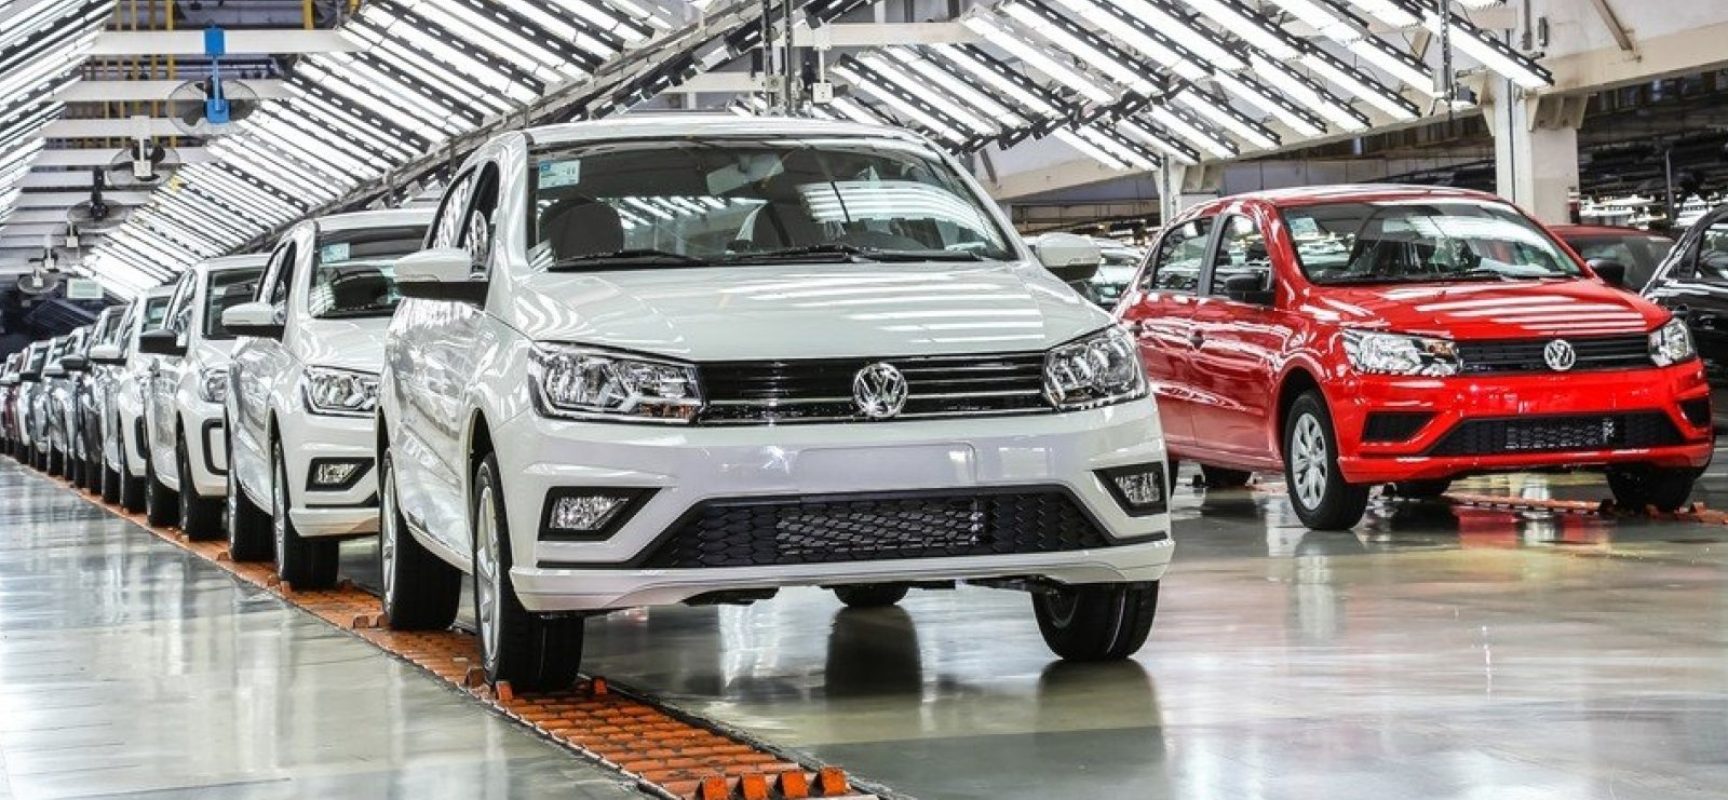 Com agravamento da pandemia, Volkswagen suspenderá produção no Brasil